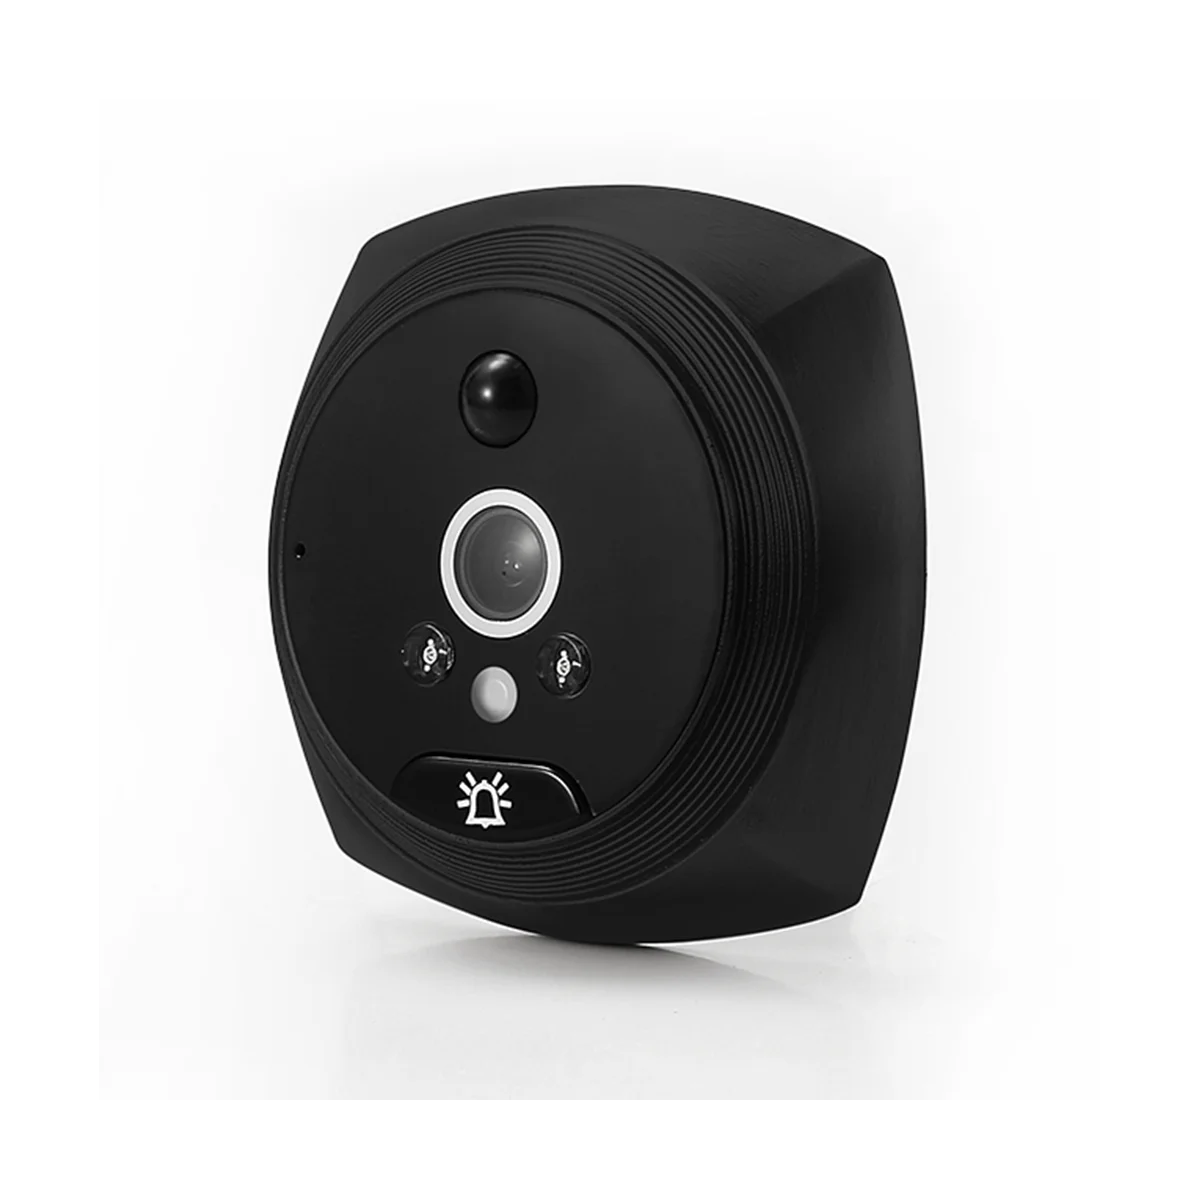 45-inch-lcd-screen-digital-doorbell-2mp-145°-night-vision-pir-door-eye-electronic-peephole-door-camera-viewer-black